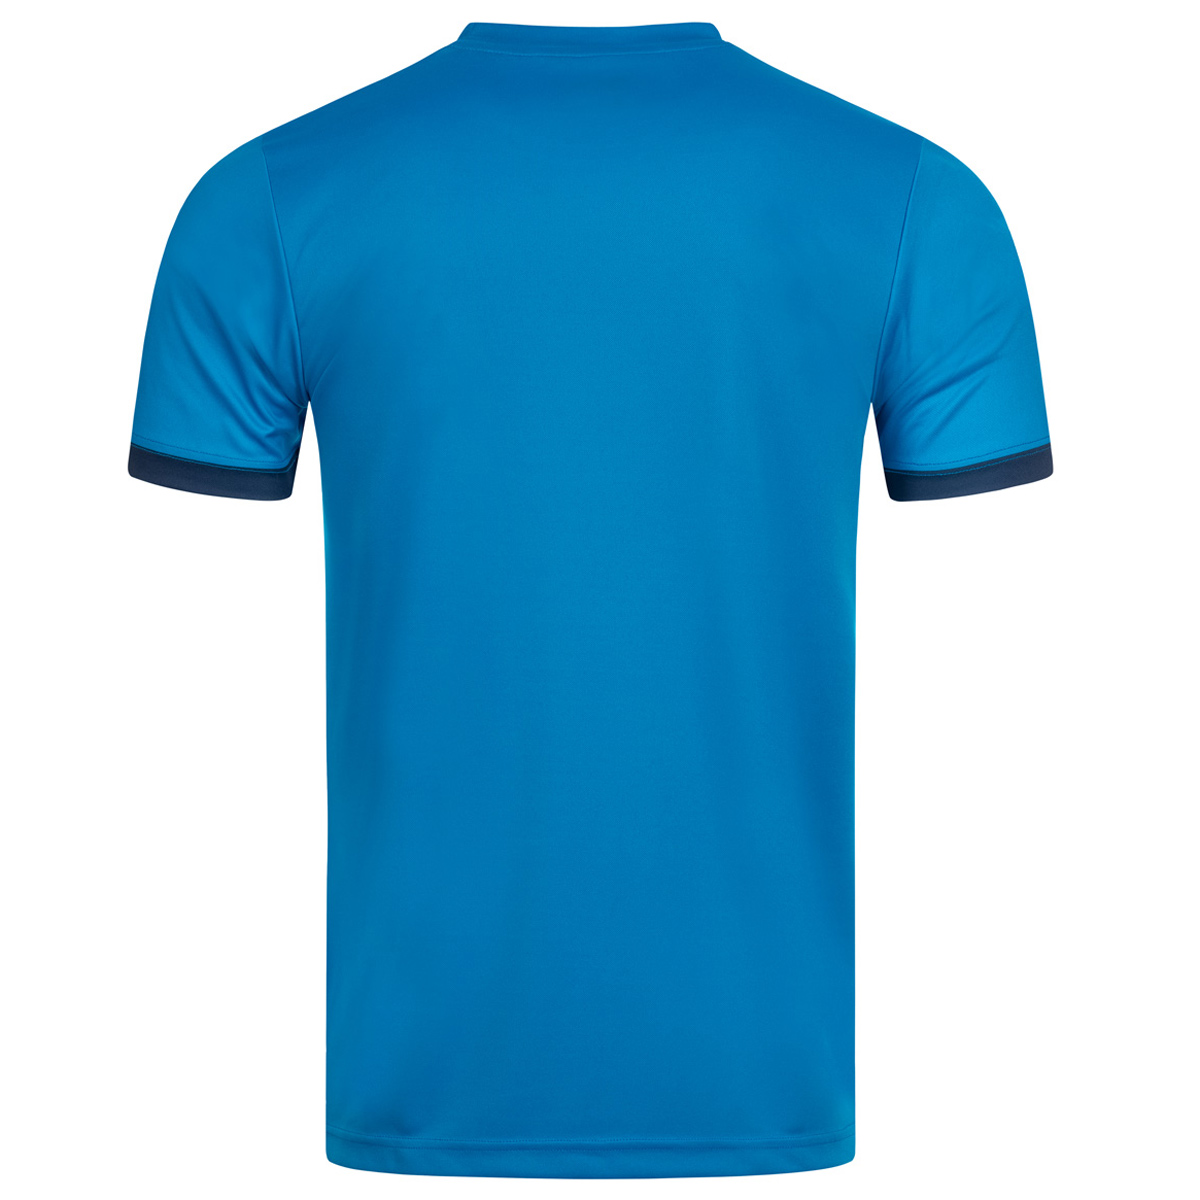 Donic T-Shirt Split Junior cyan/marine BK152